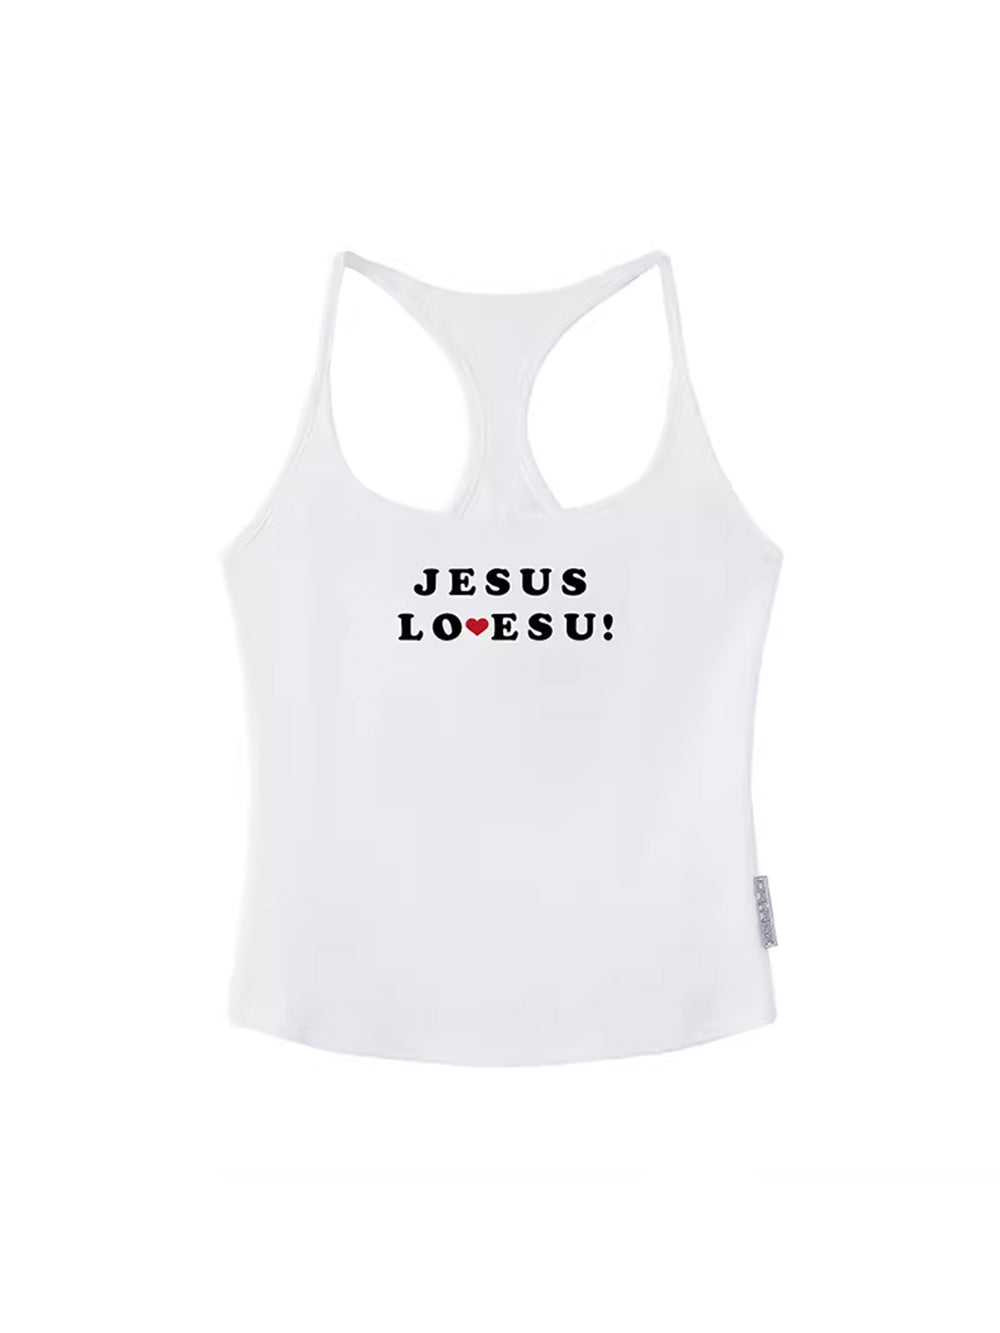 MUKTANK x Damage Asia "JESUS LOVES U" Camisole Tank Top